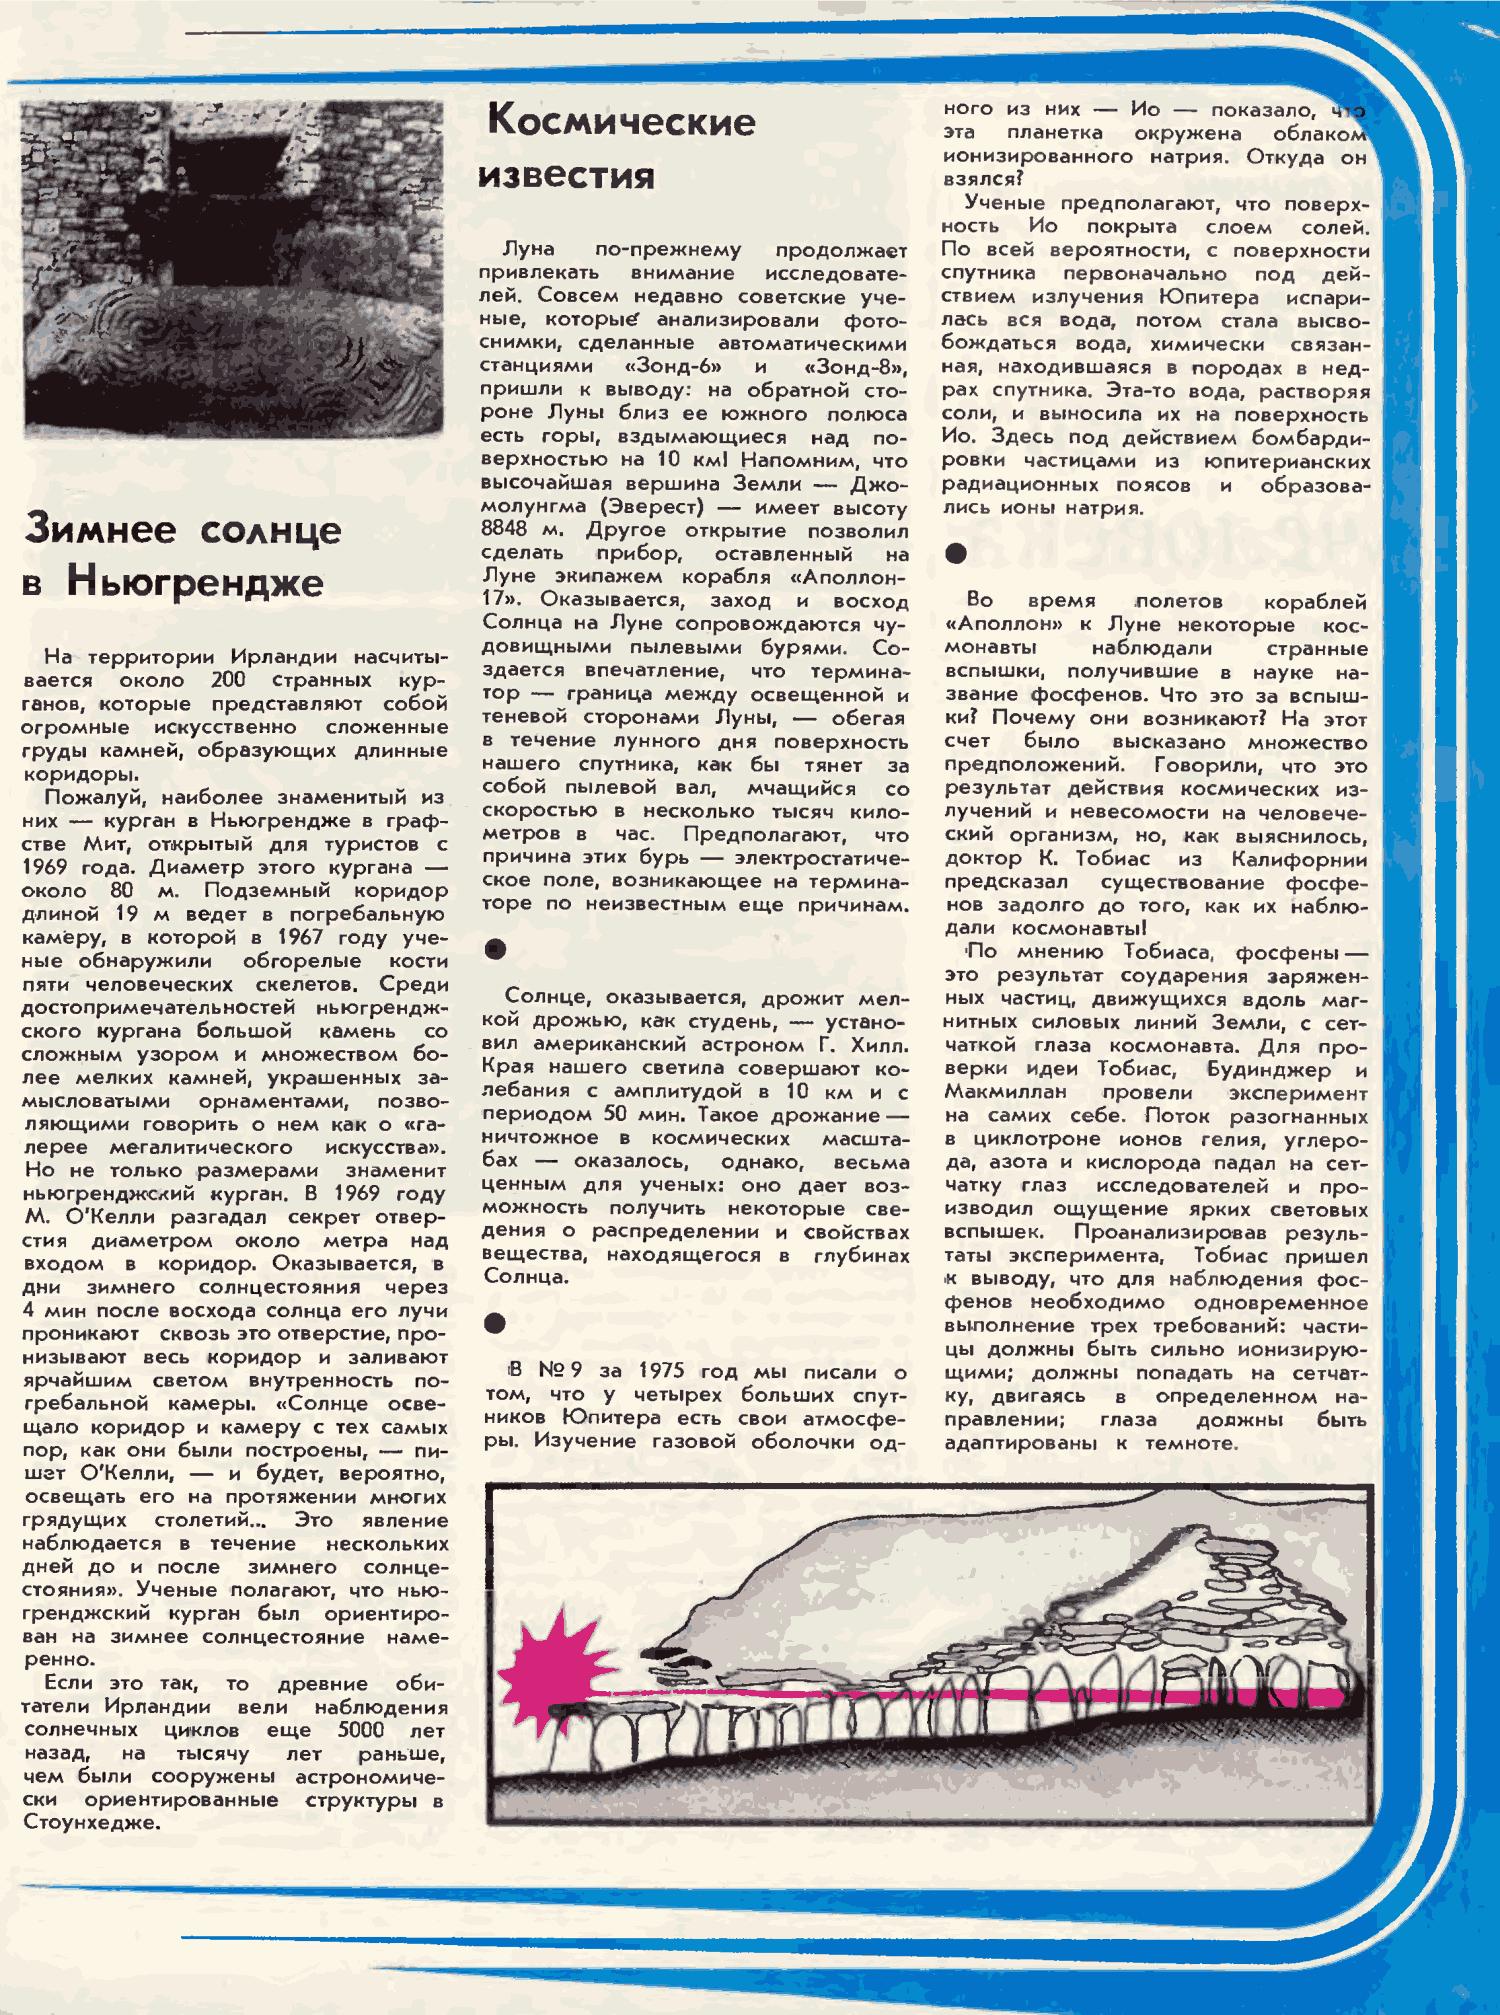 Космические известия. Техника — Молодёжи, 1976, №2, с.27. Фотокопия